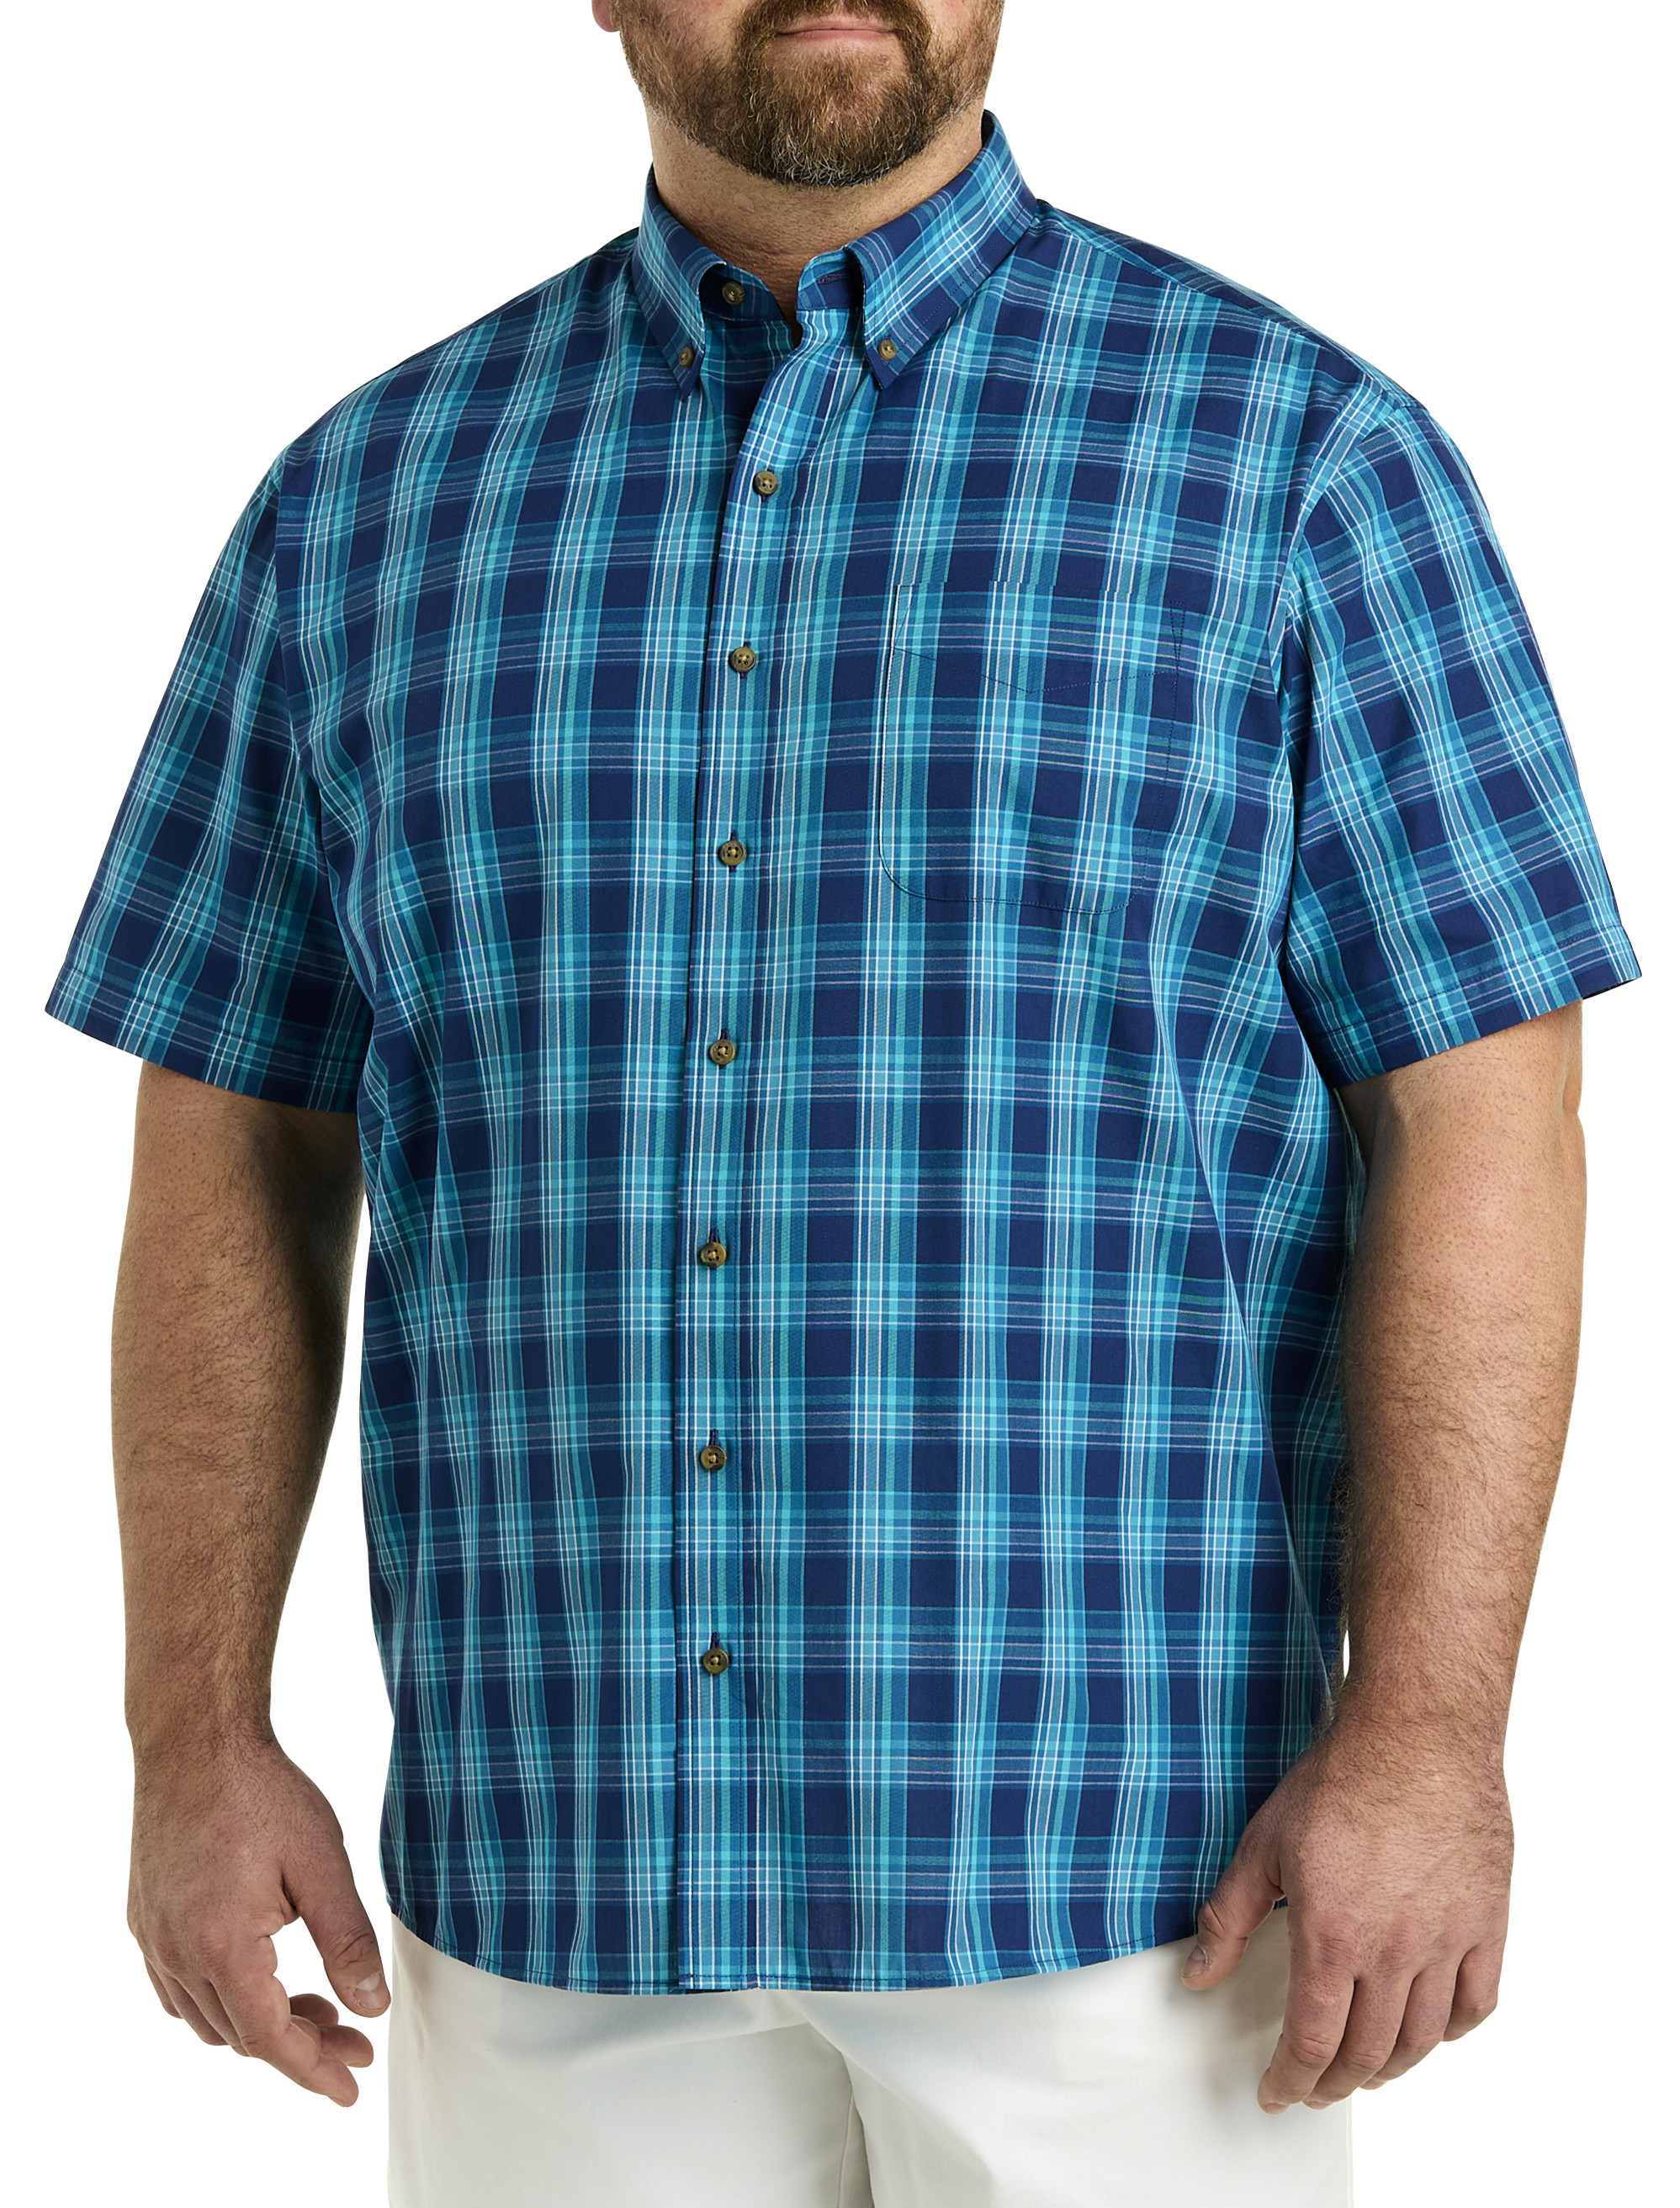 B91Xz Big And Tall Shirts for Men Mens Solid Short Sleeve Shirt